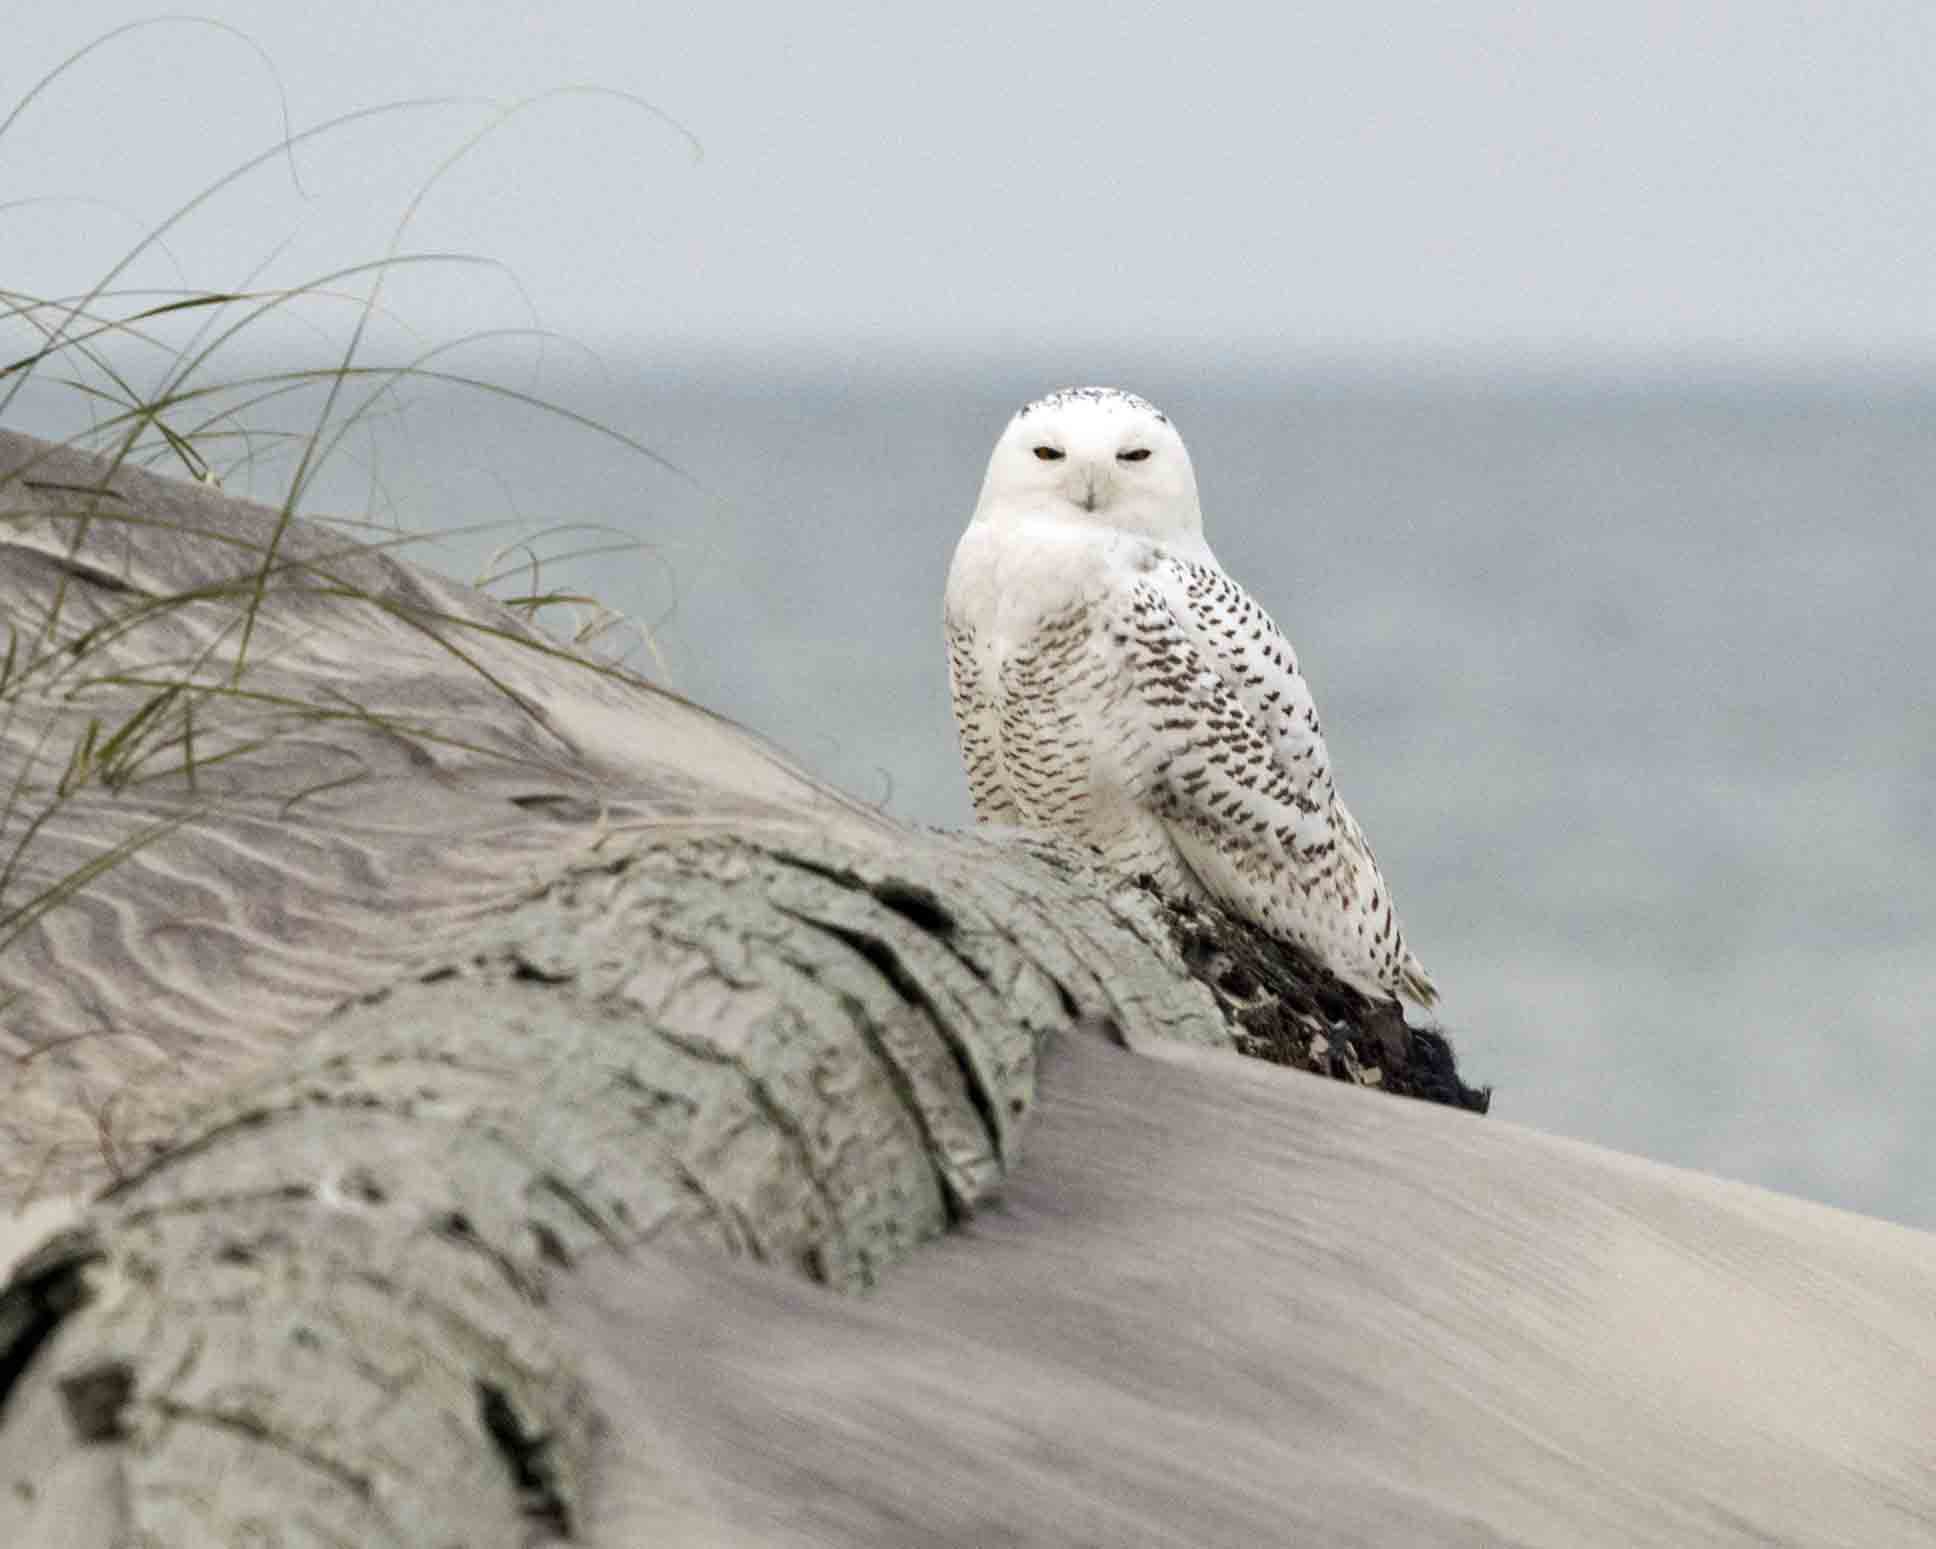 They're Back! Snowy Owls return to North Carolina - Ocracokeobserver.com